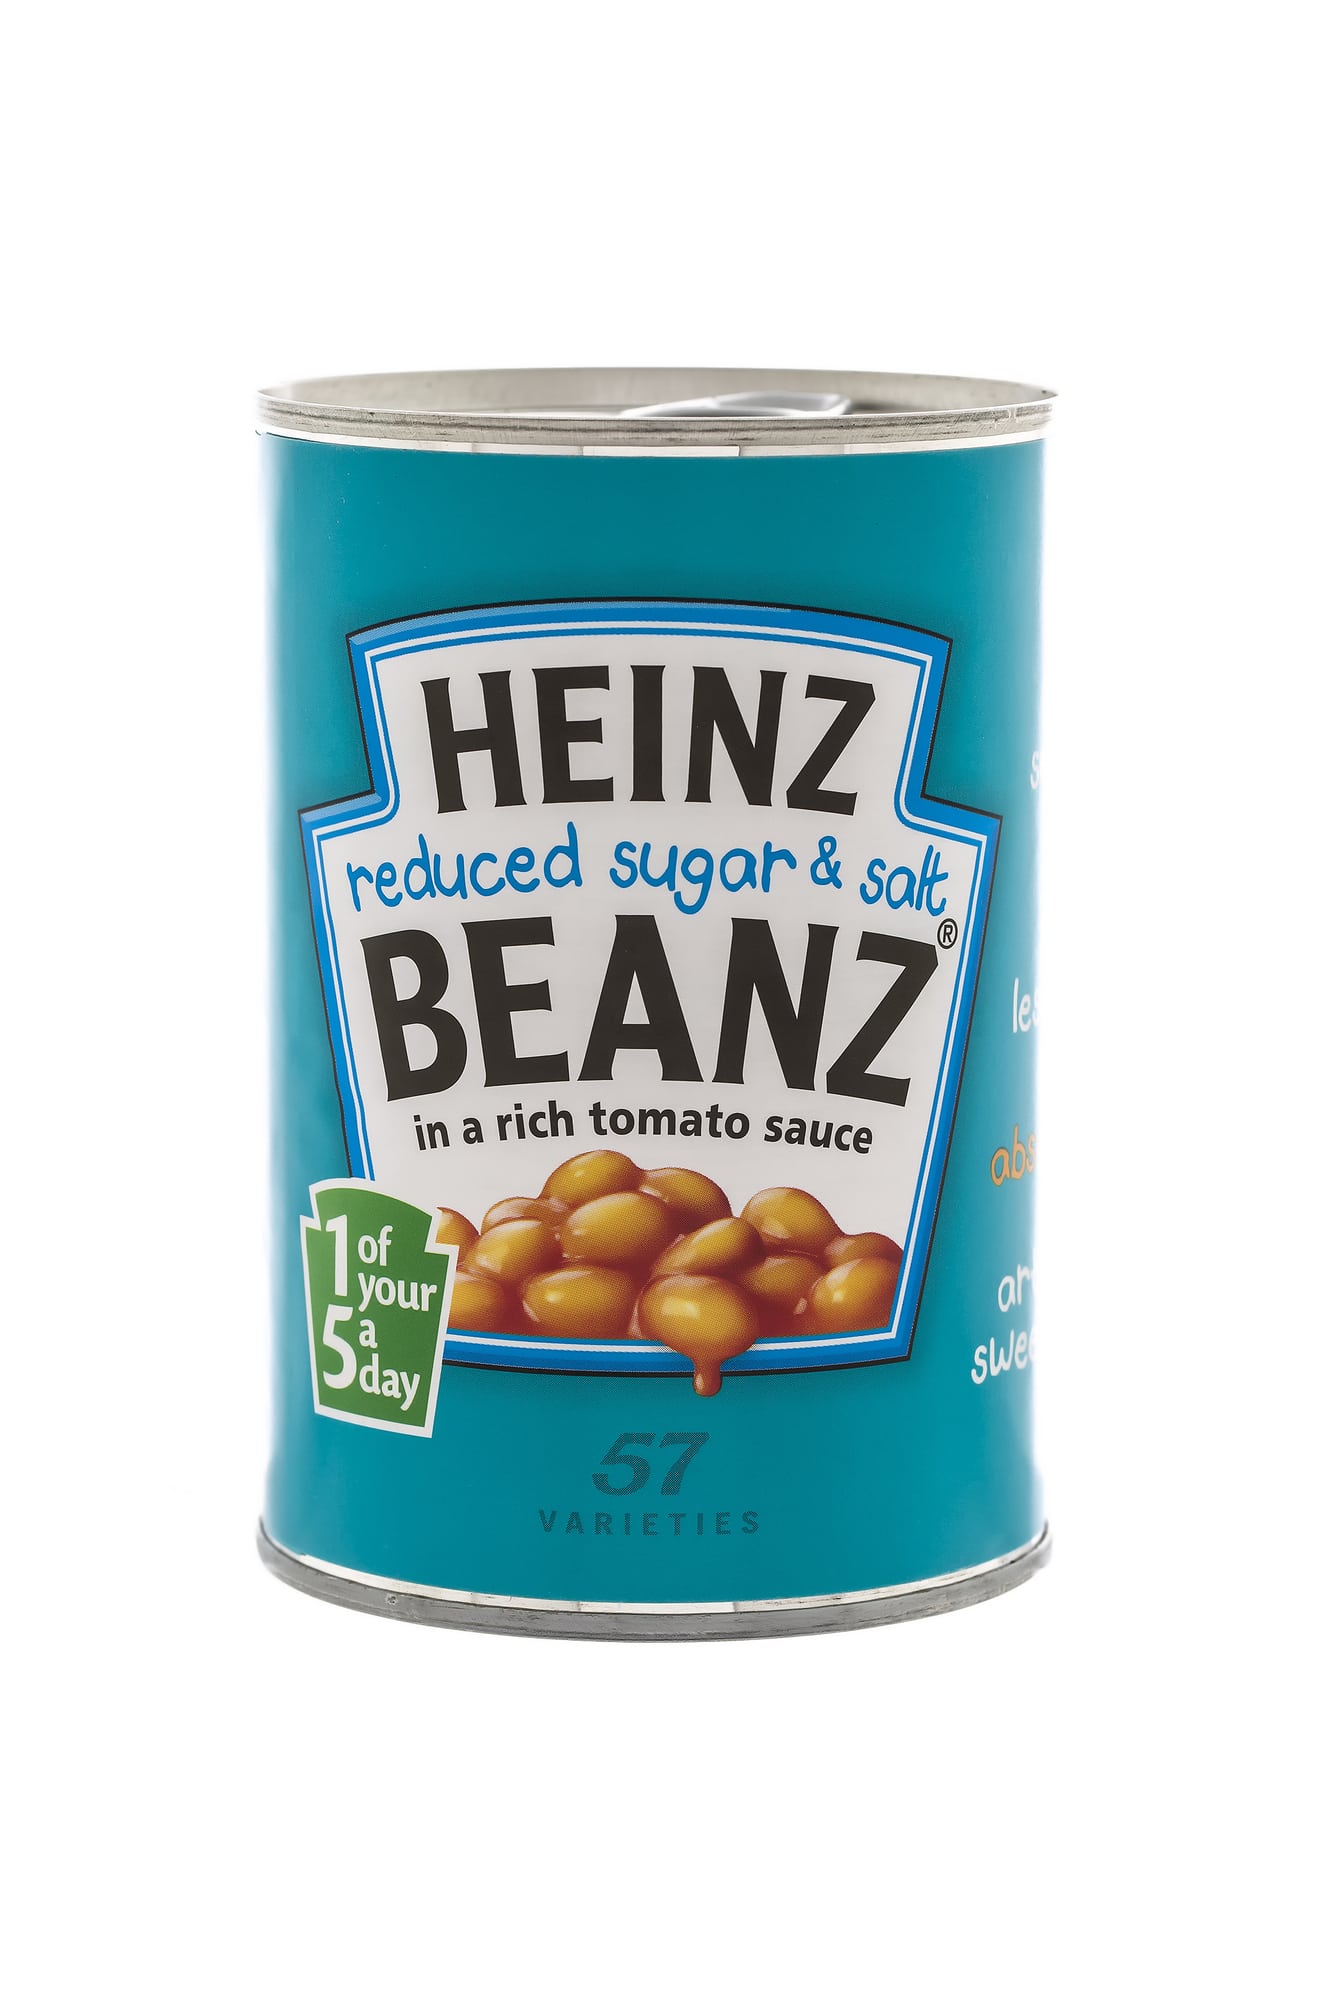 stock-image-of-Heinz-product-label